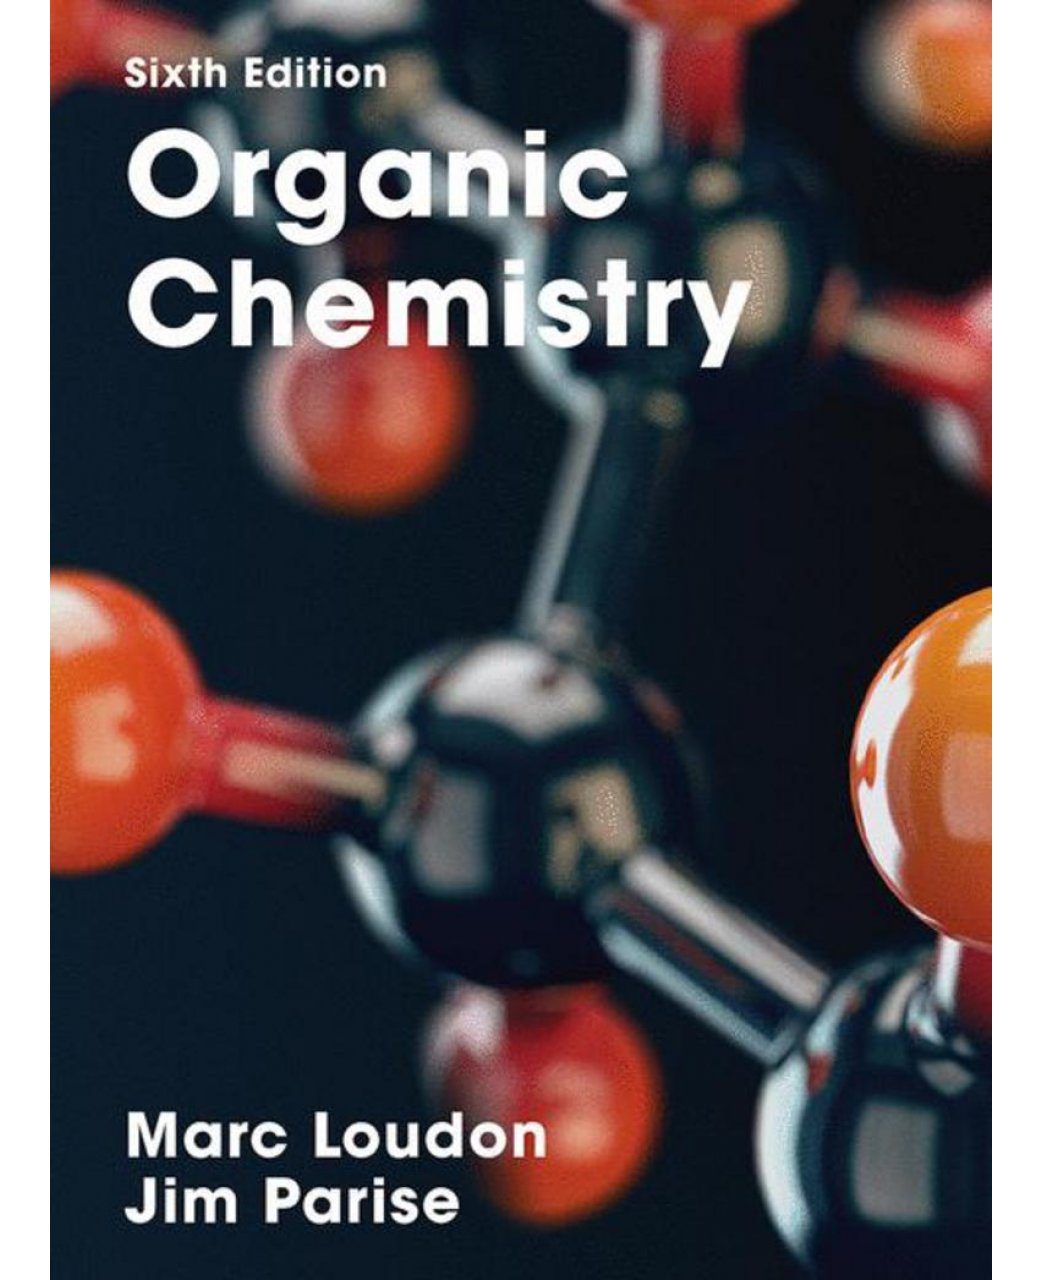 Vi химия. Organic Chemistry book.